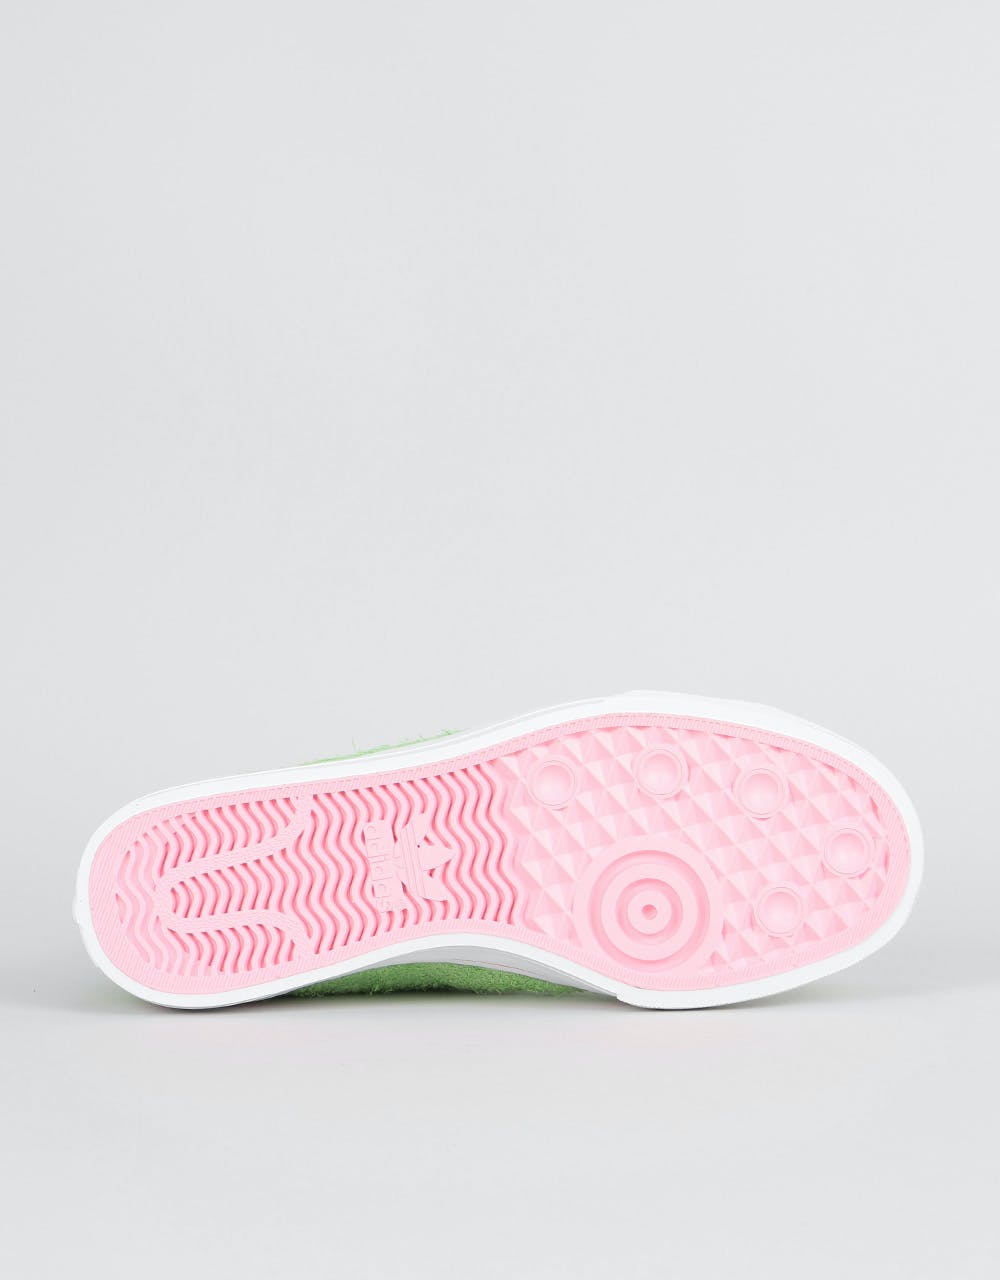 Adidas x Na-Kel Nizza Hi RFS Skate Shoes - Spring Green/White/Pink